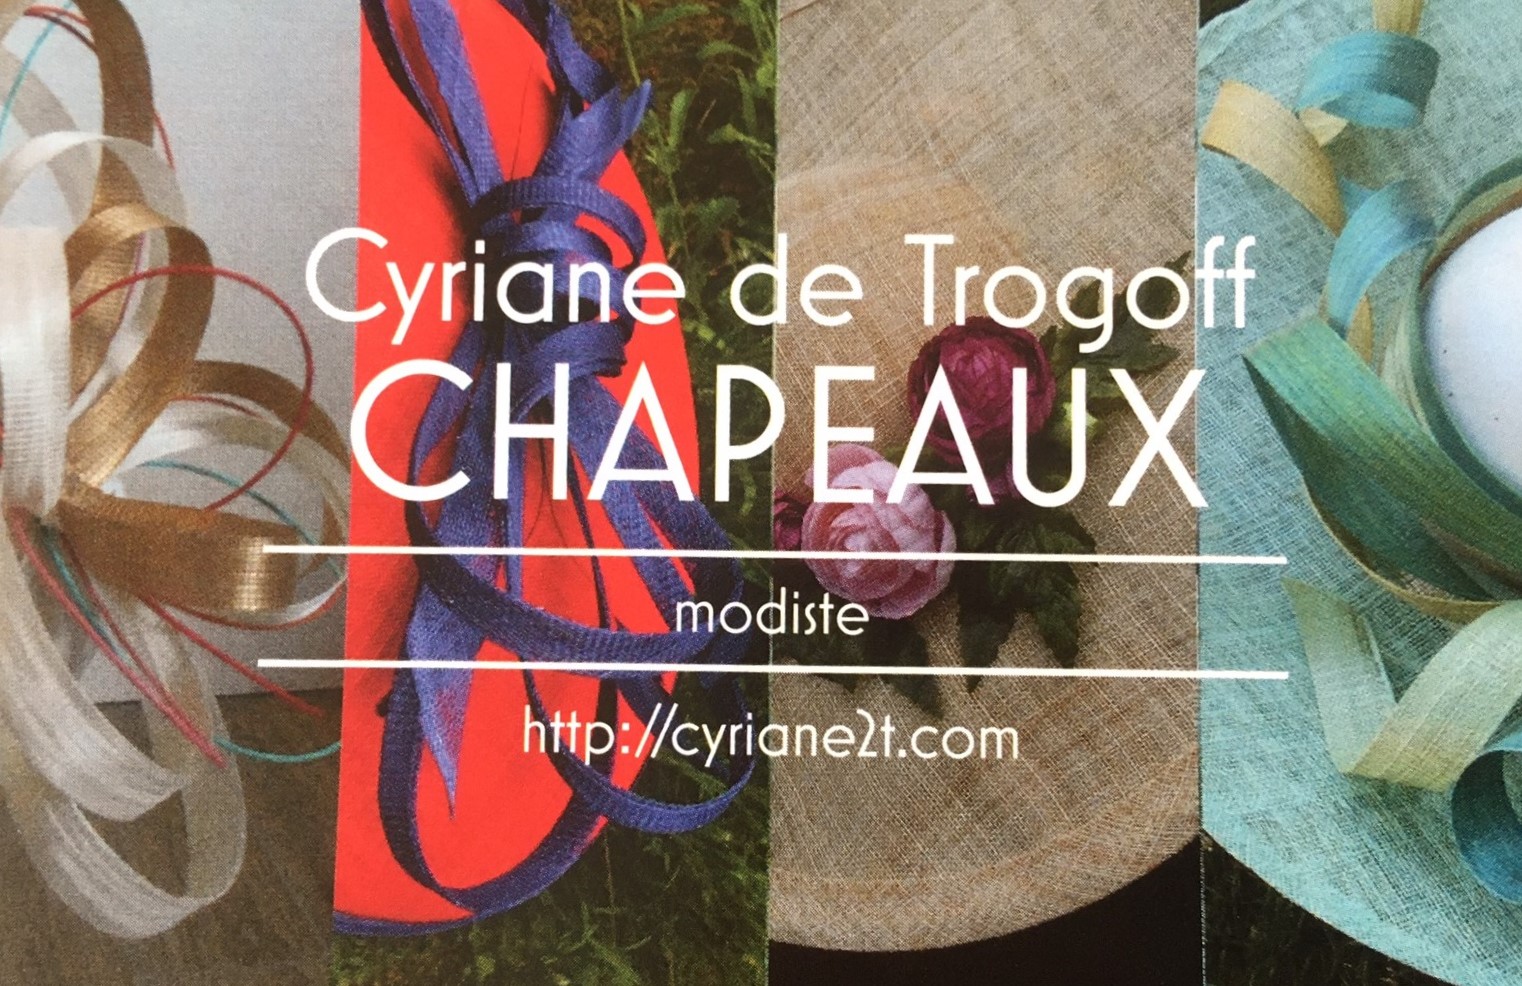 Cyriane Chapeaux